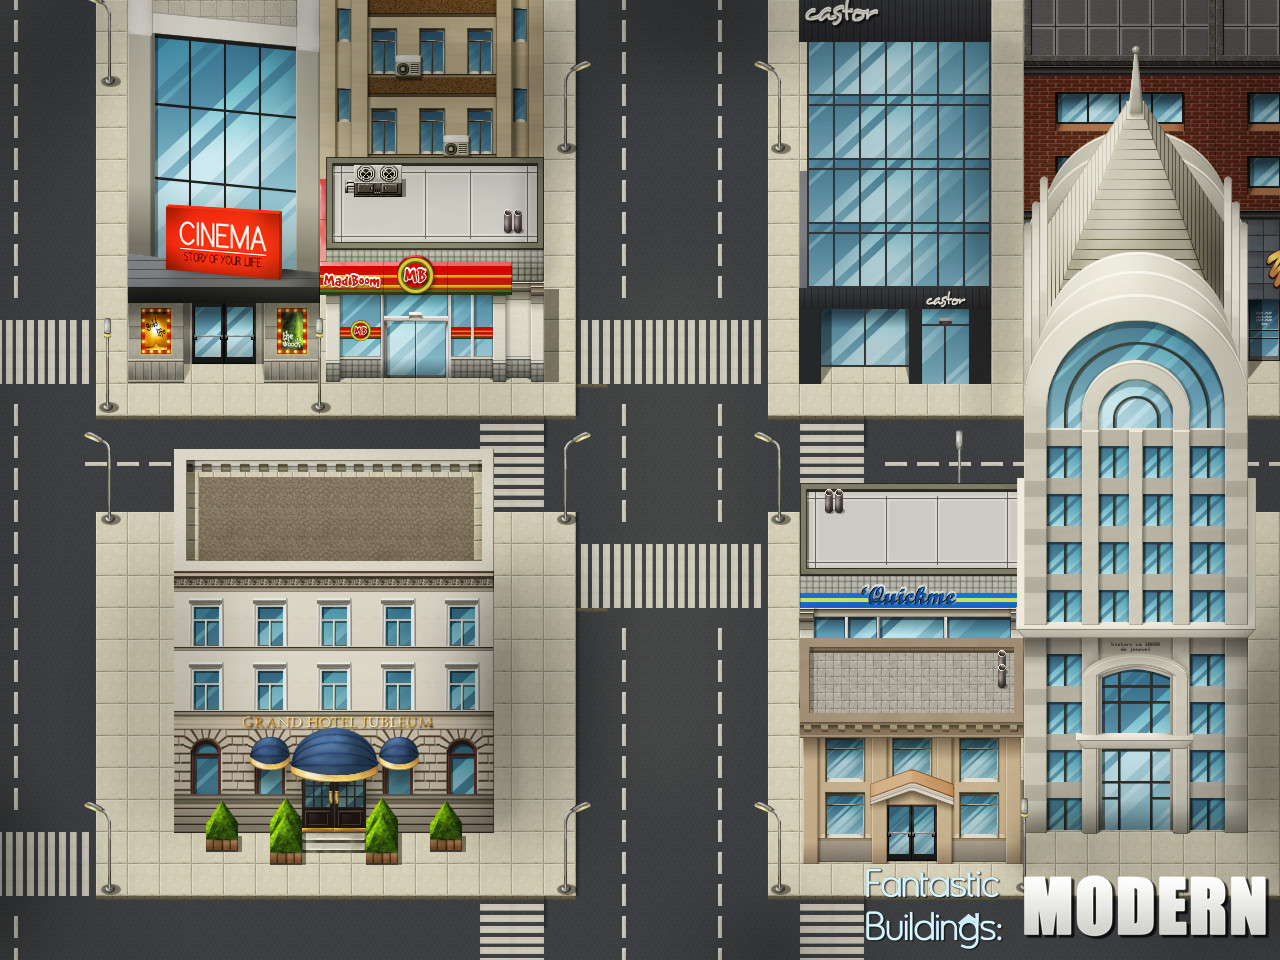 [$ 5.07] RPG Maker VX - Ace Fantastic Buildings: Modern DLC EU Steam CD Key